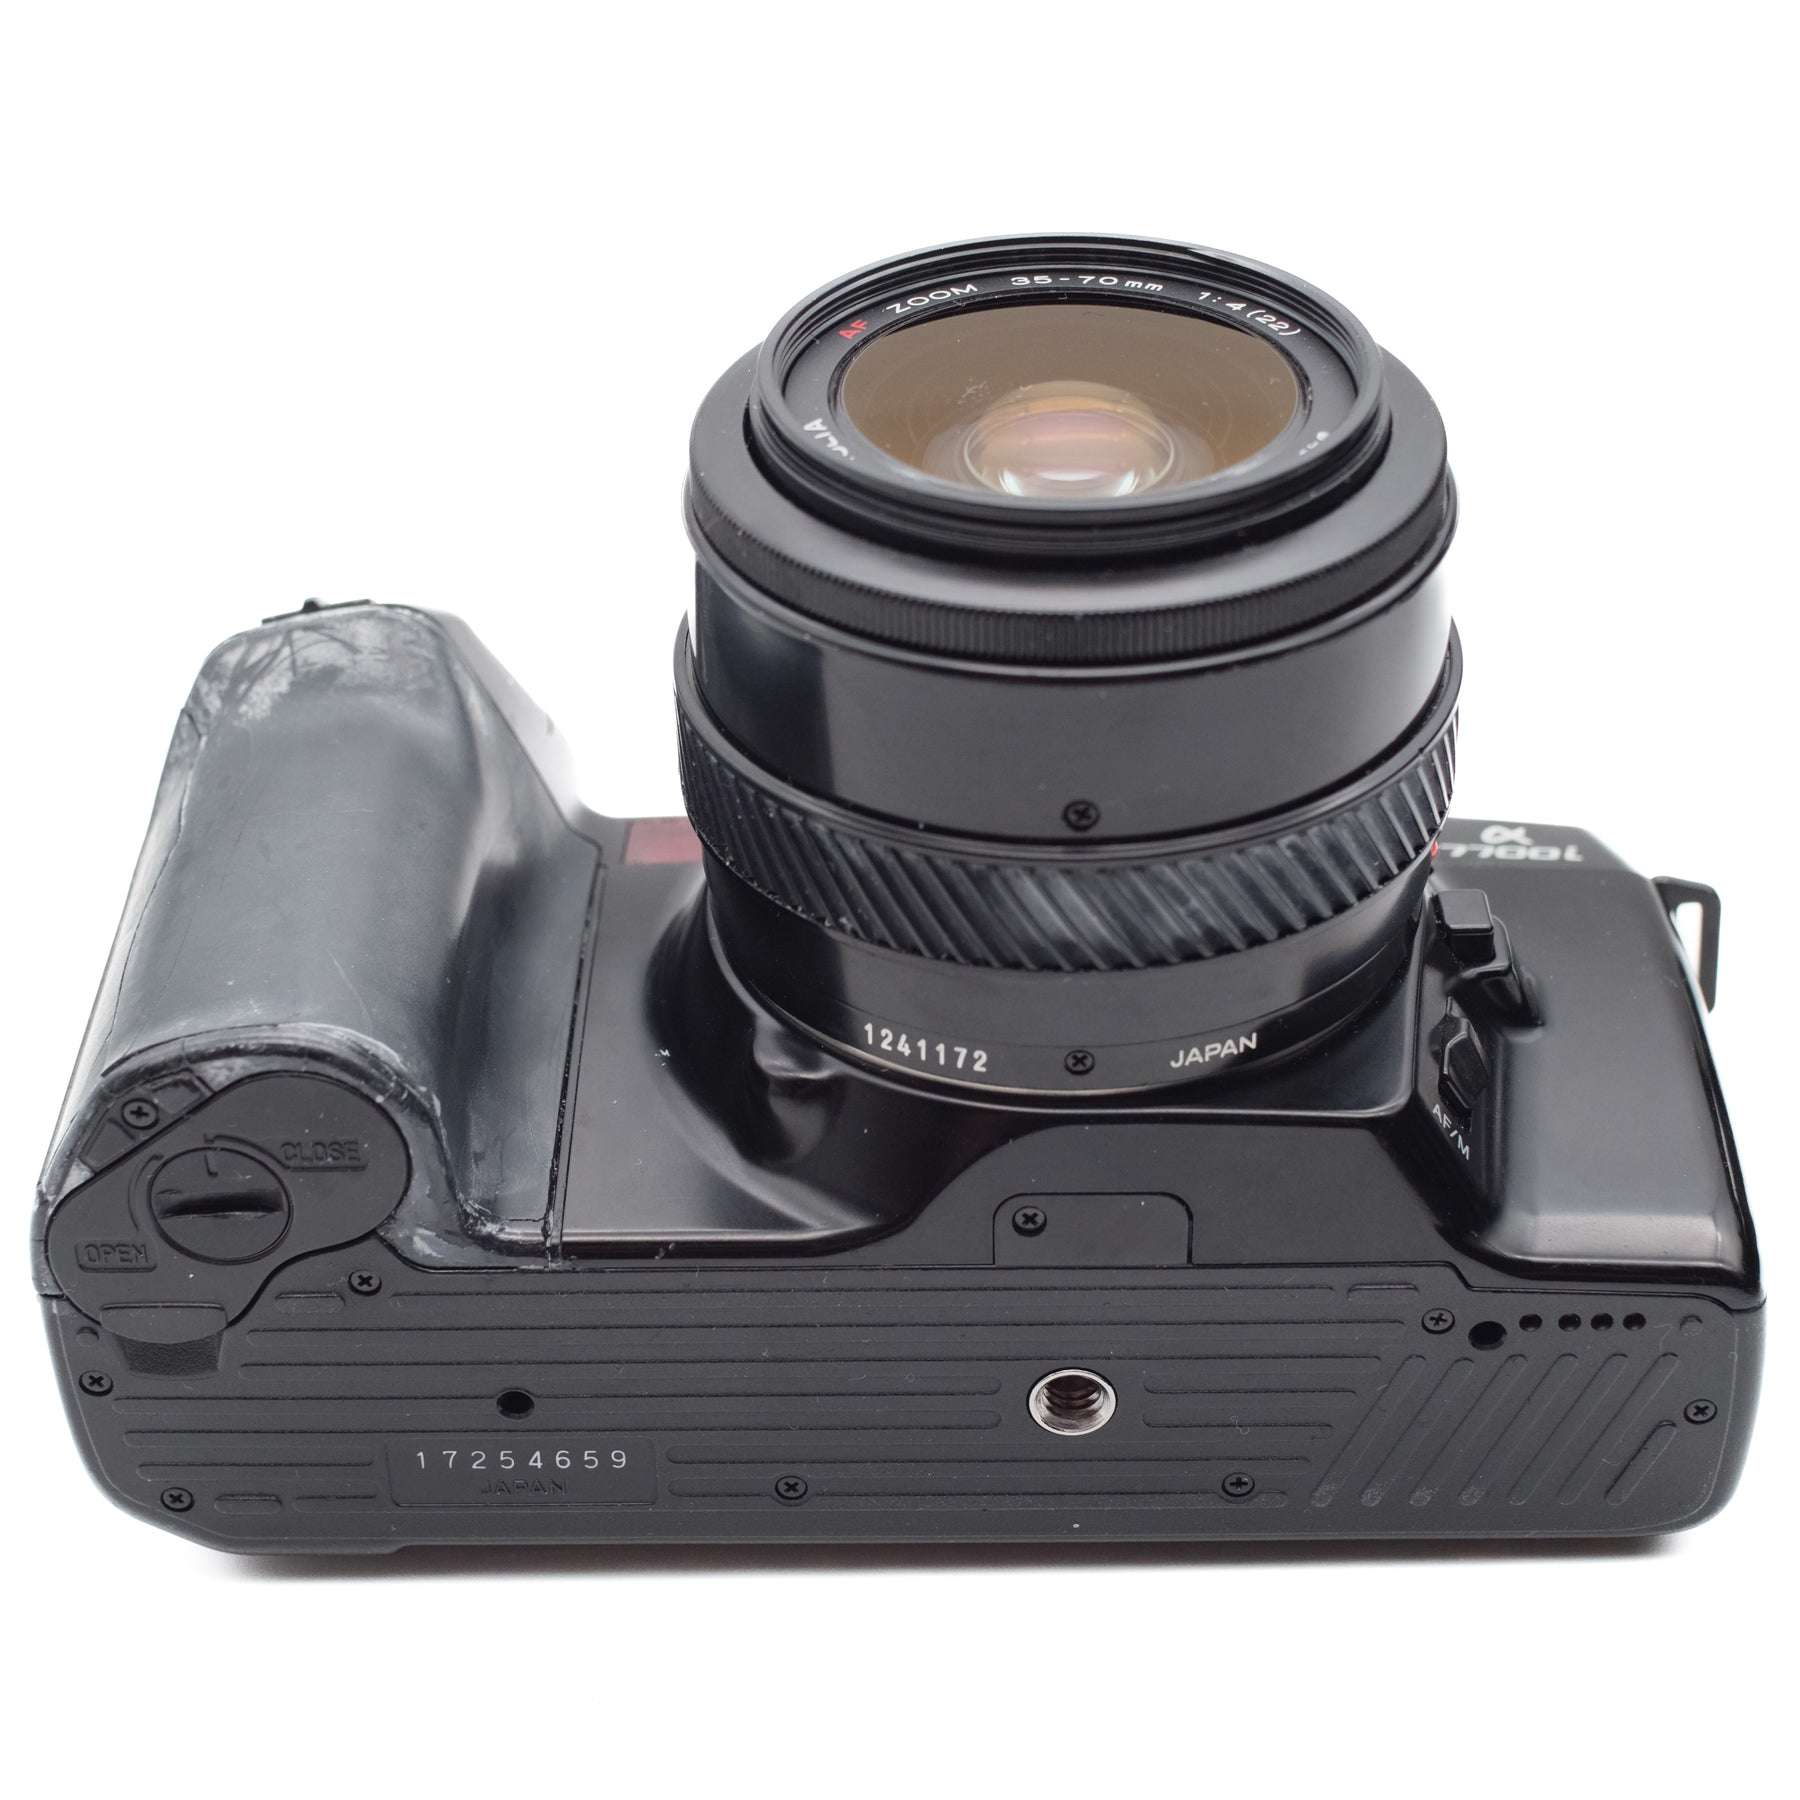 Minolta α-7700i 35mm SLR Camera Set (Minolta AF 35 - 70mm f/4 Lens